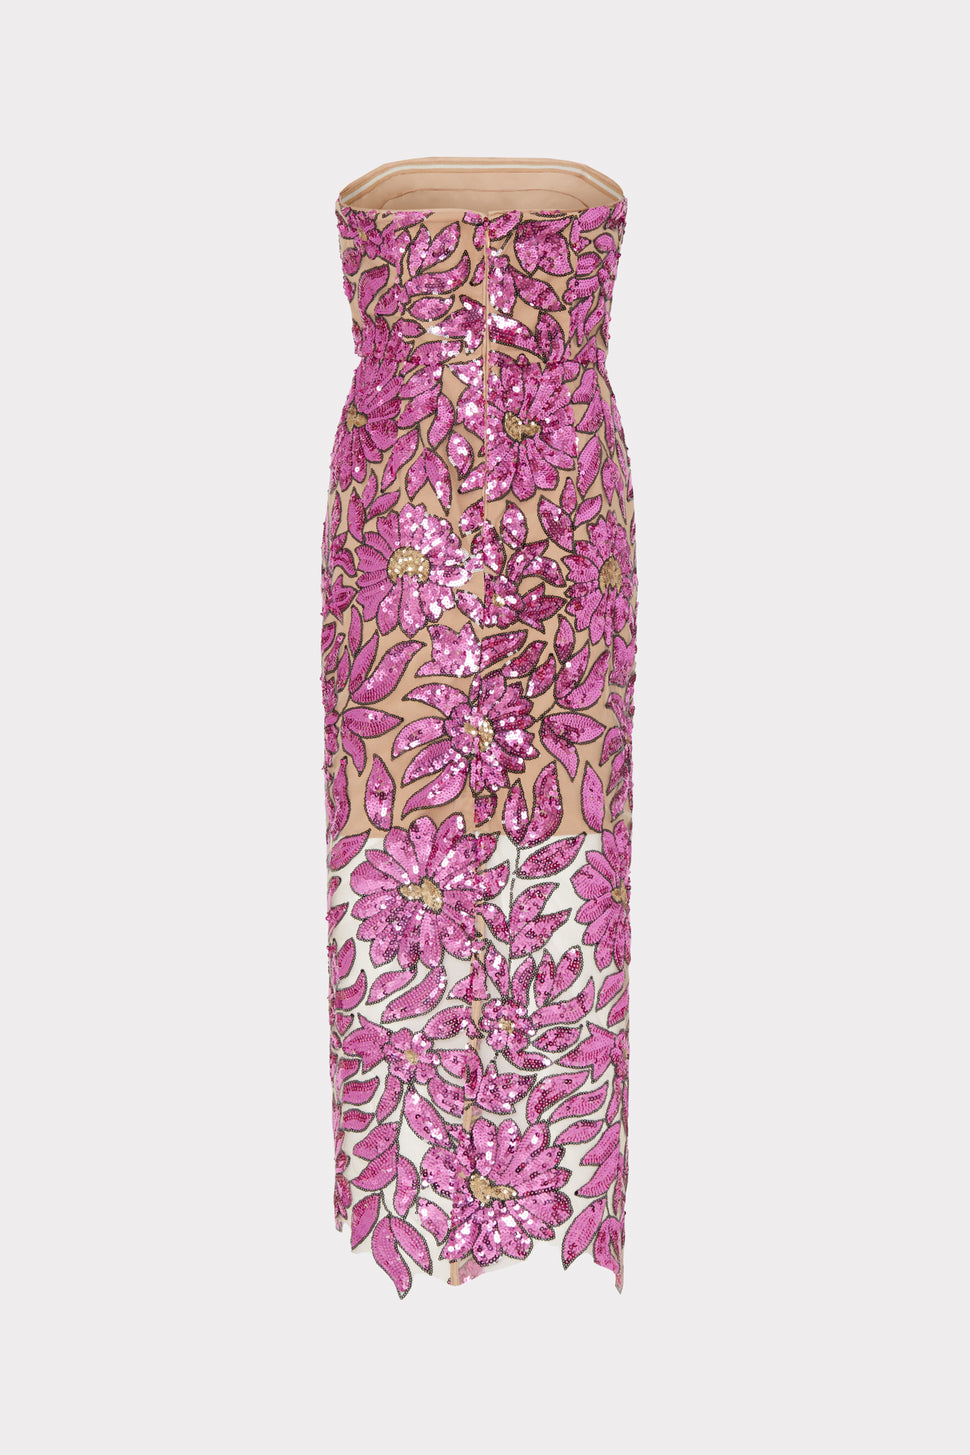 Dolce & Gabbana Sequined Briefs in Pink